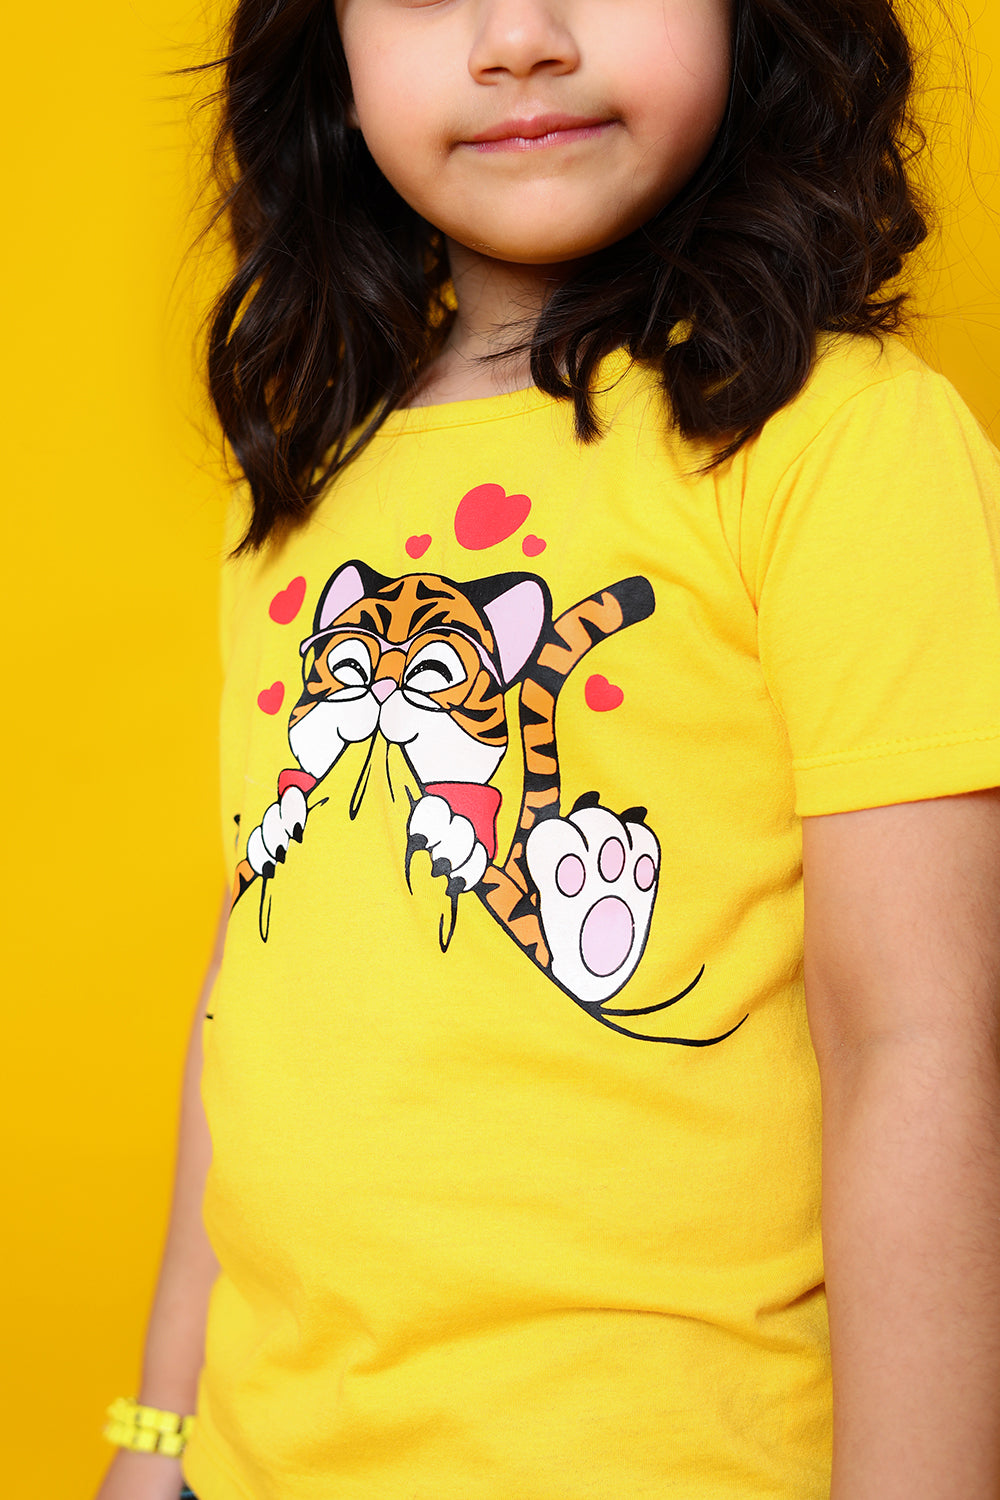 Cute cat graphic T-shirt 100% cotton jersey fabric